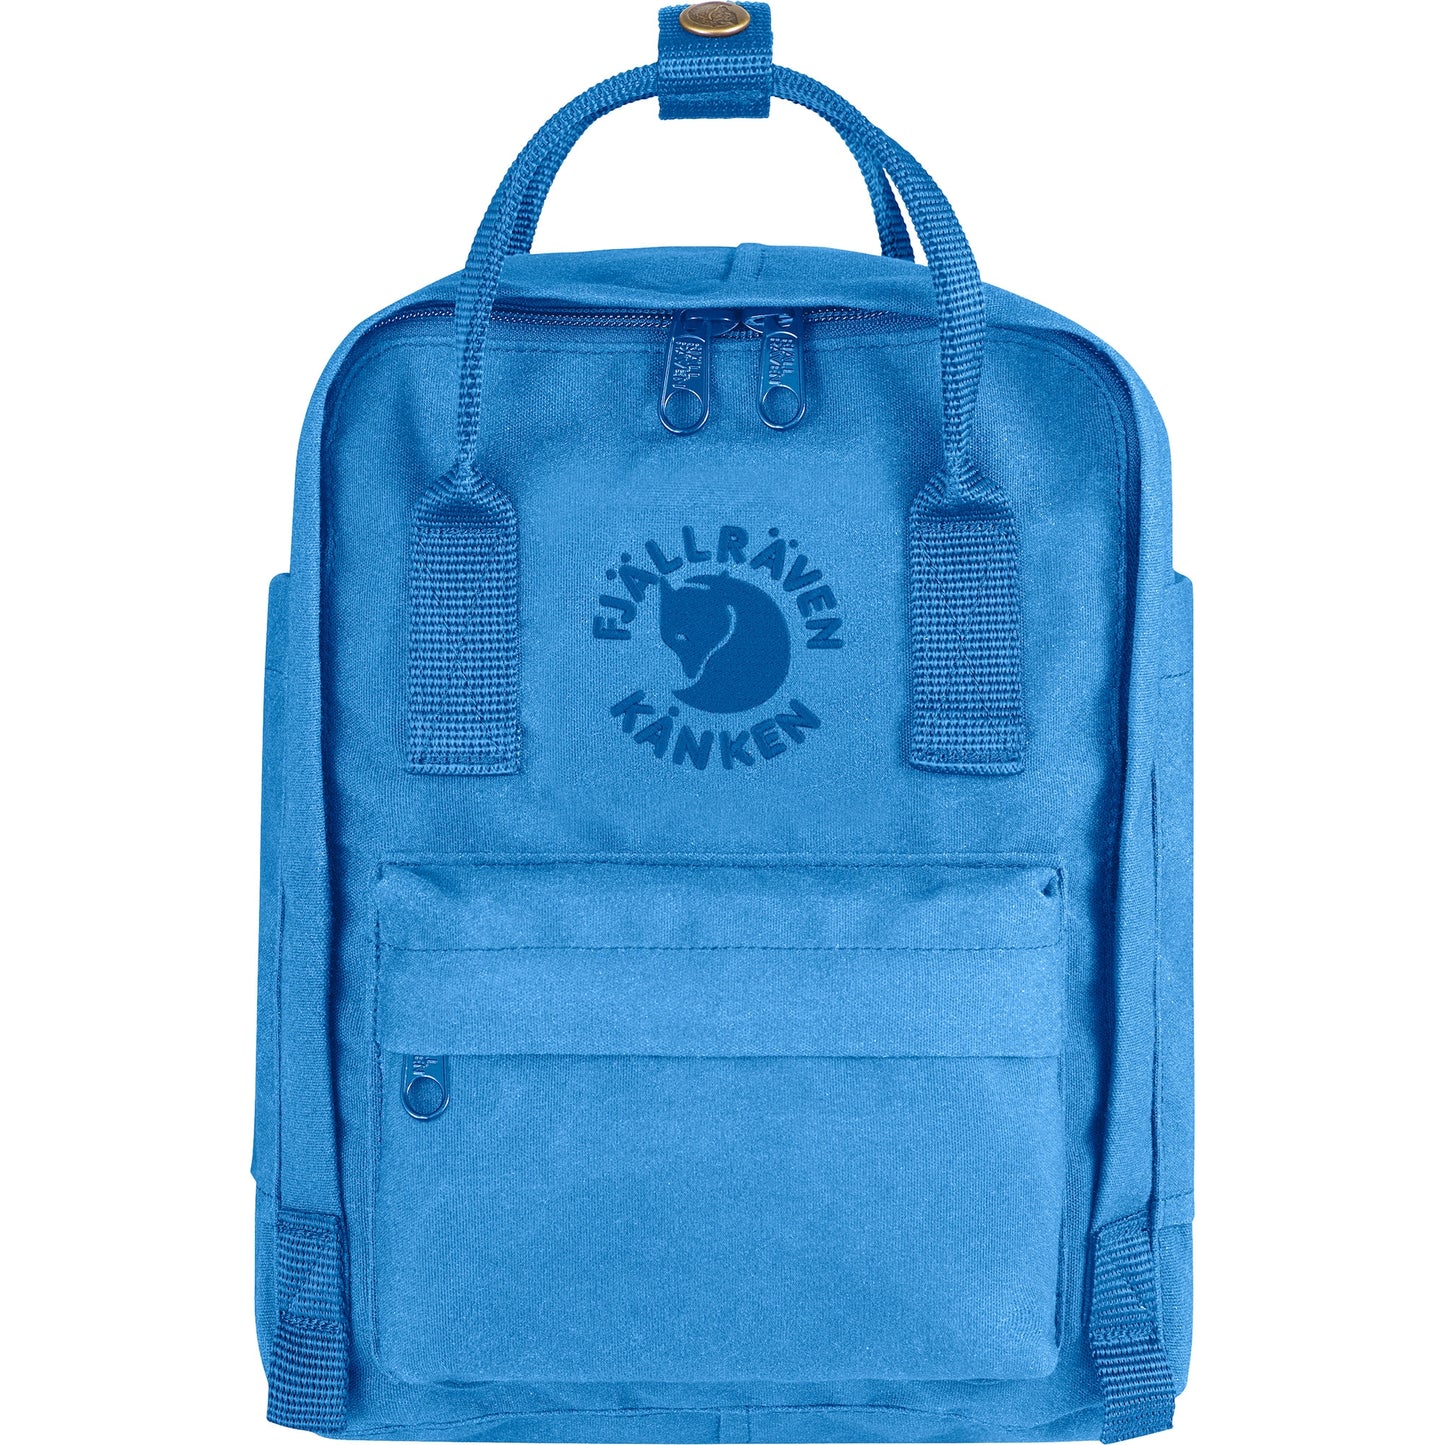 FJÄLLRÄVEN - 瑞典北極狐【狐狸袋】RE-KÅNKEN Mini 7L 迷你背囊 School bag outdoor backpack 23549-525 UN BLUE